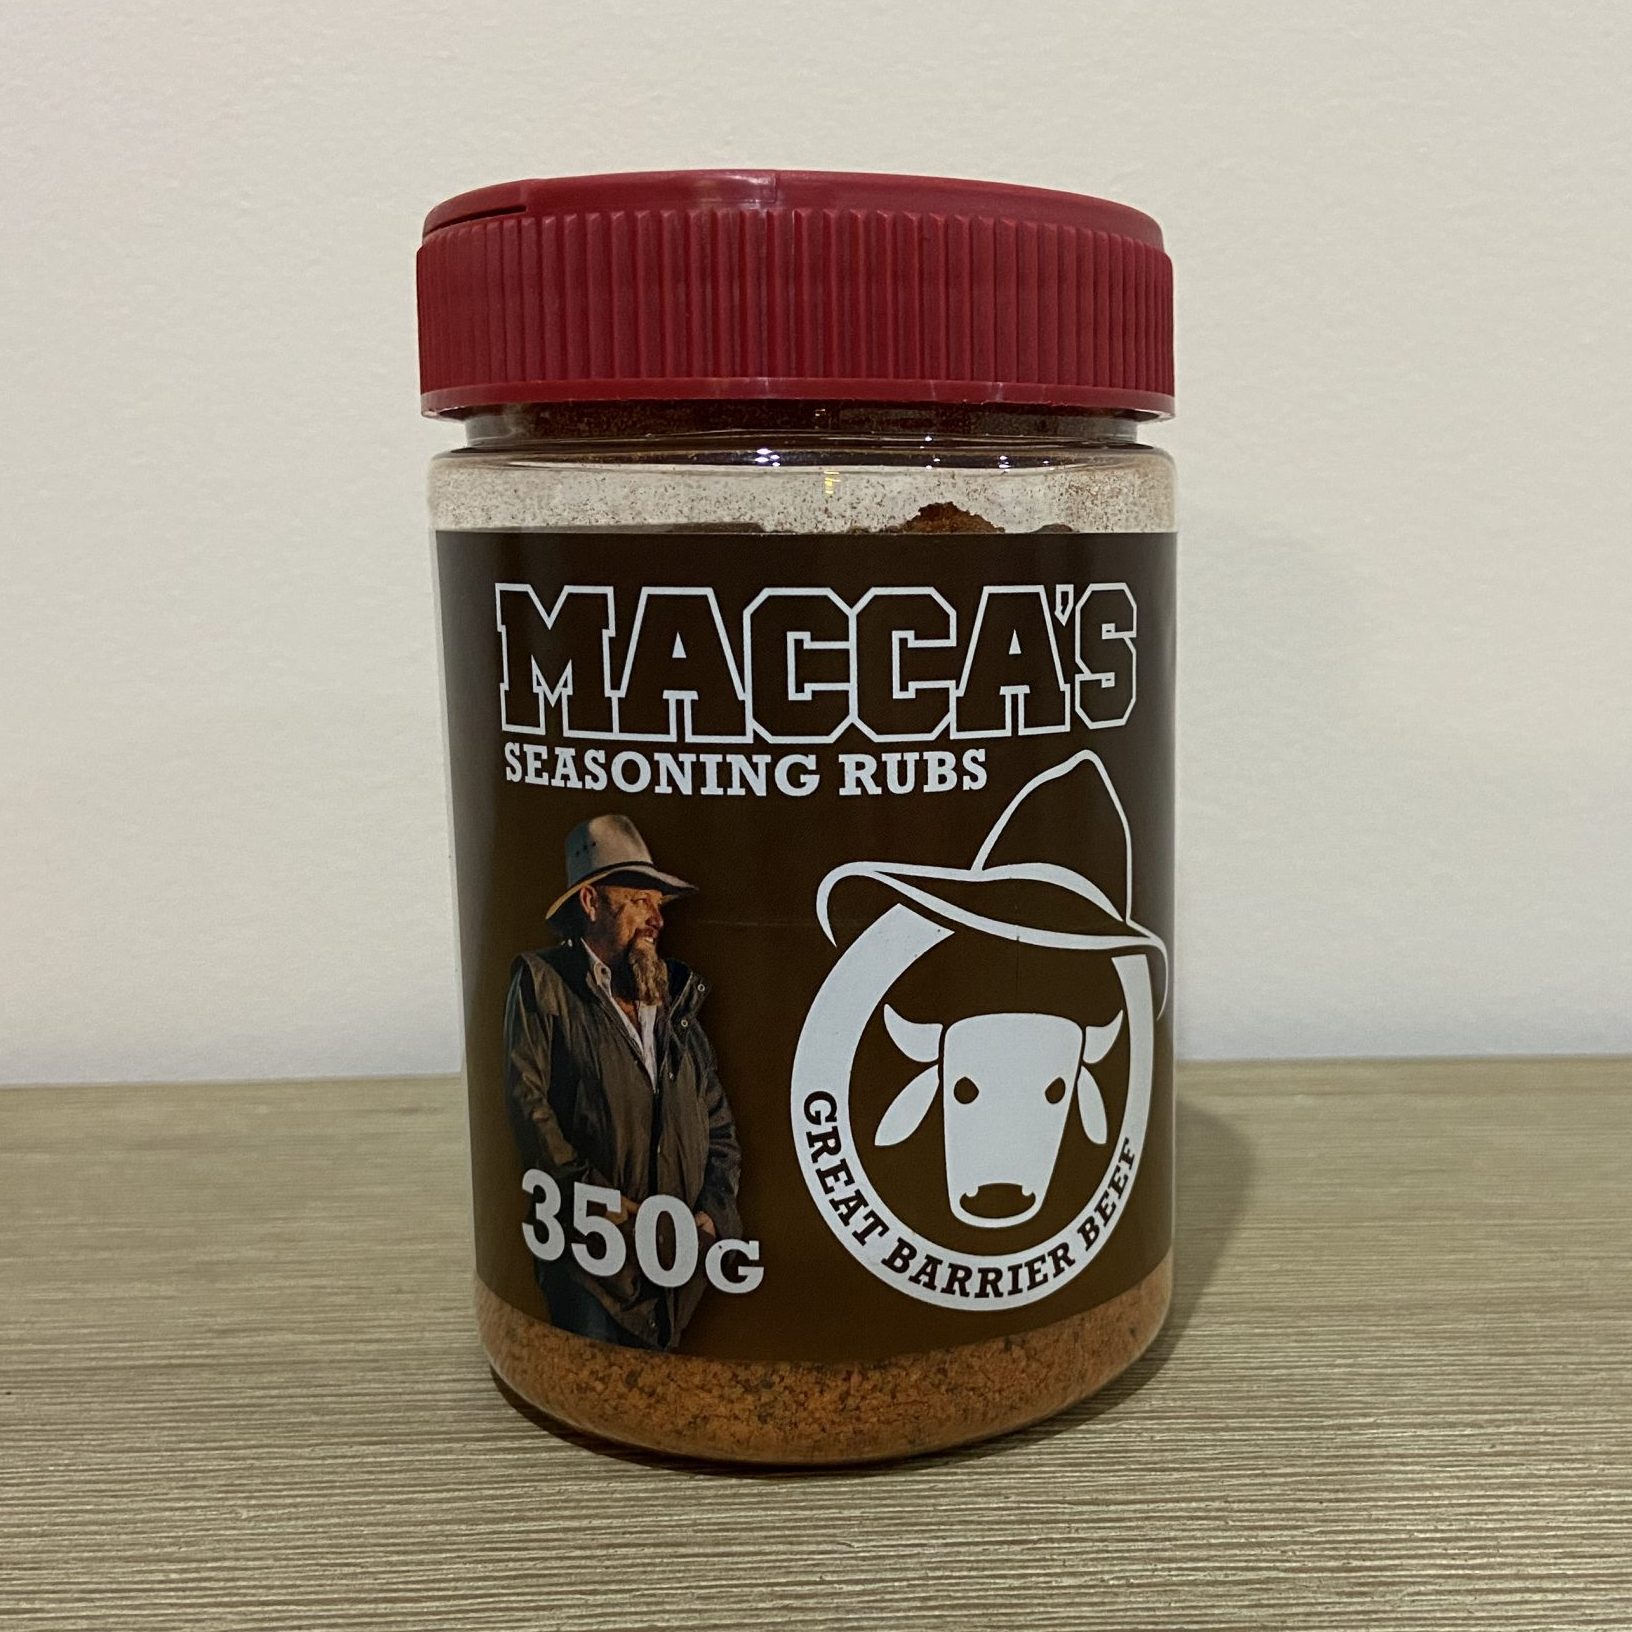 Macca’s seasoning rubs – great barrier beef 350g